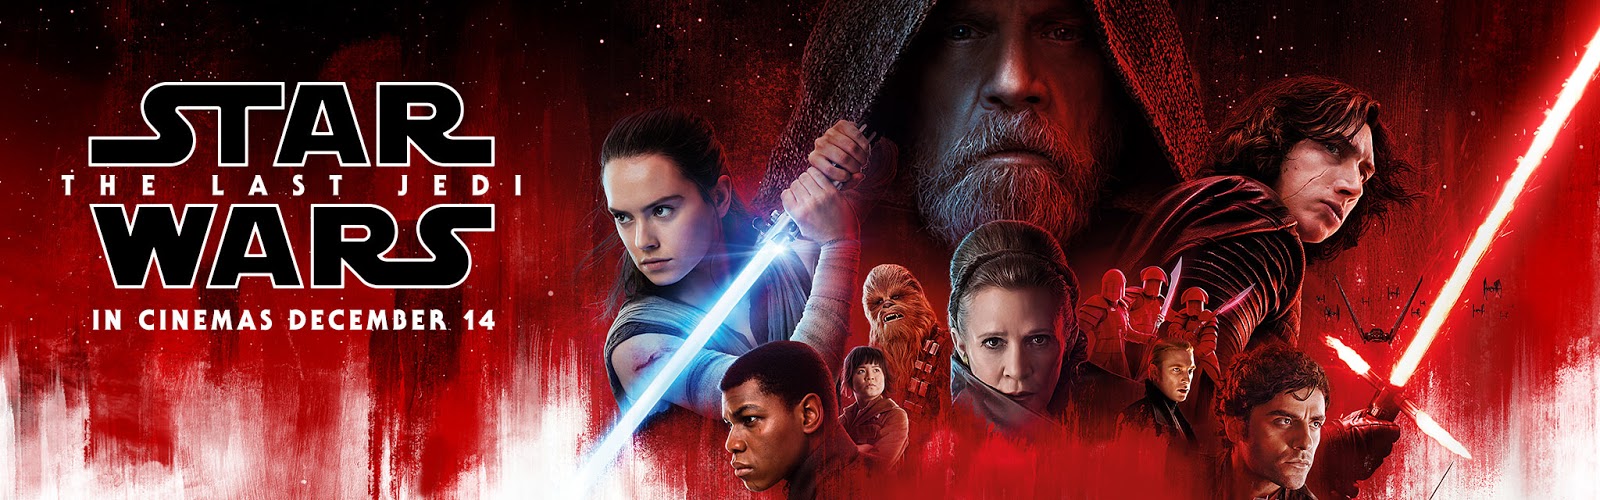 Return of the Jedi Rebellious Rescue Carrie Fisher 2018 Hallmark Star Wars 